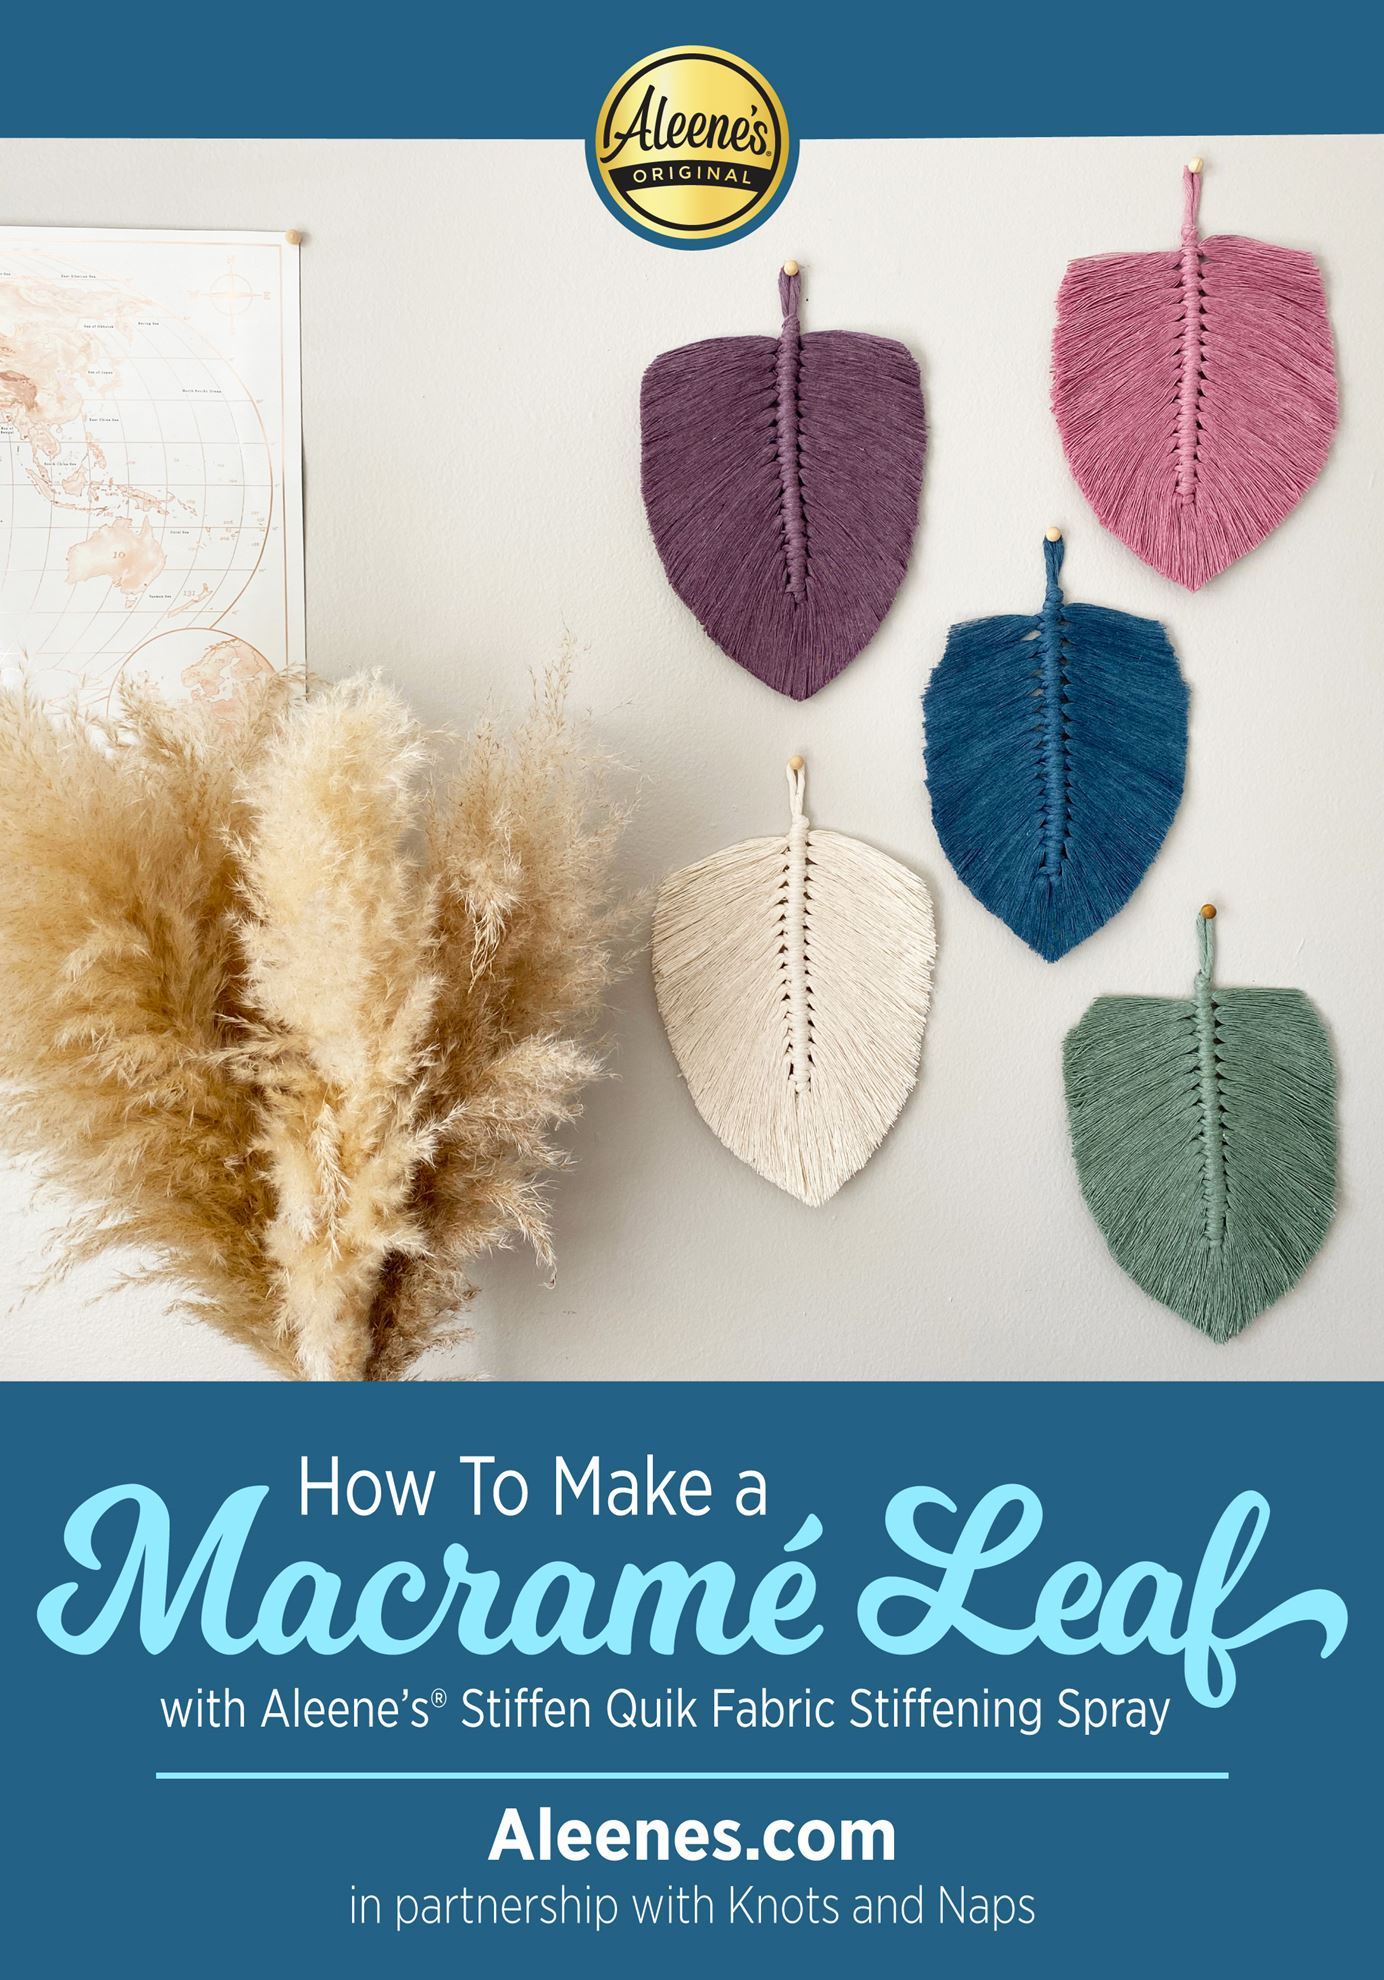 Aleene's Original Glues - How To Make a Macrame Leaf with Fabric Stiffener